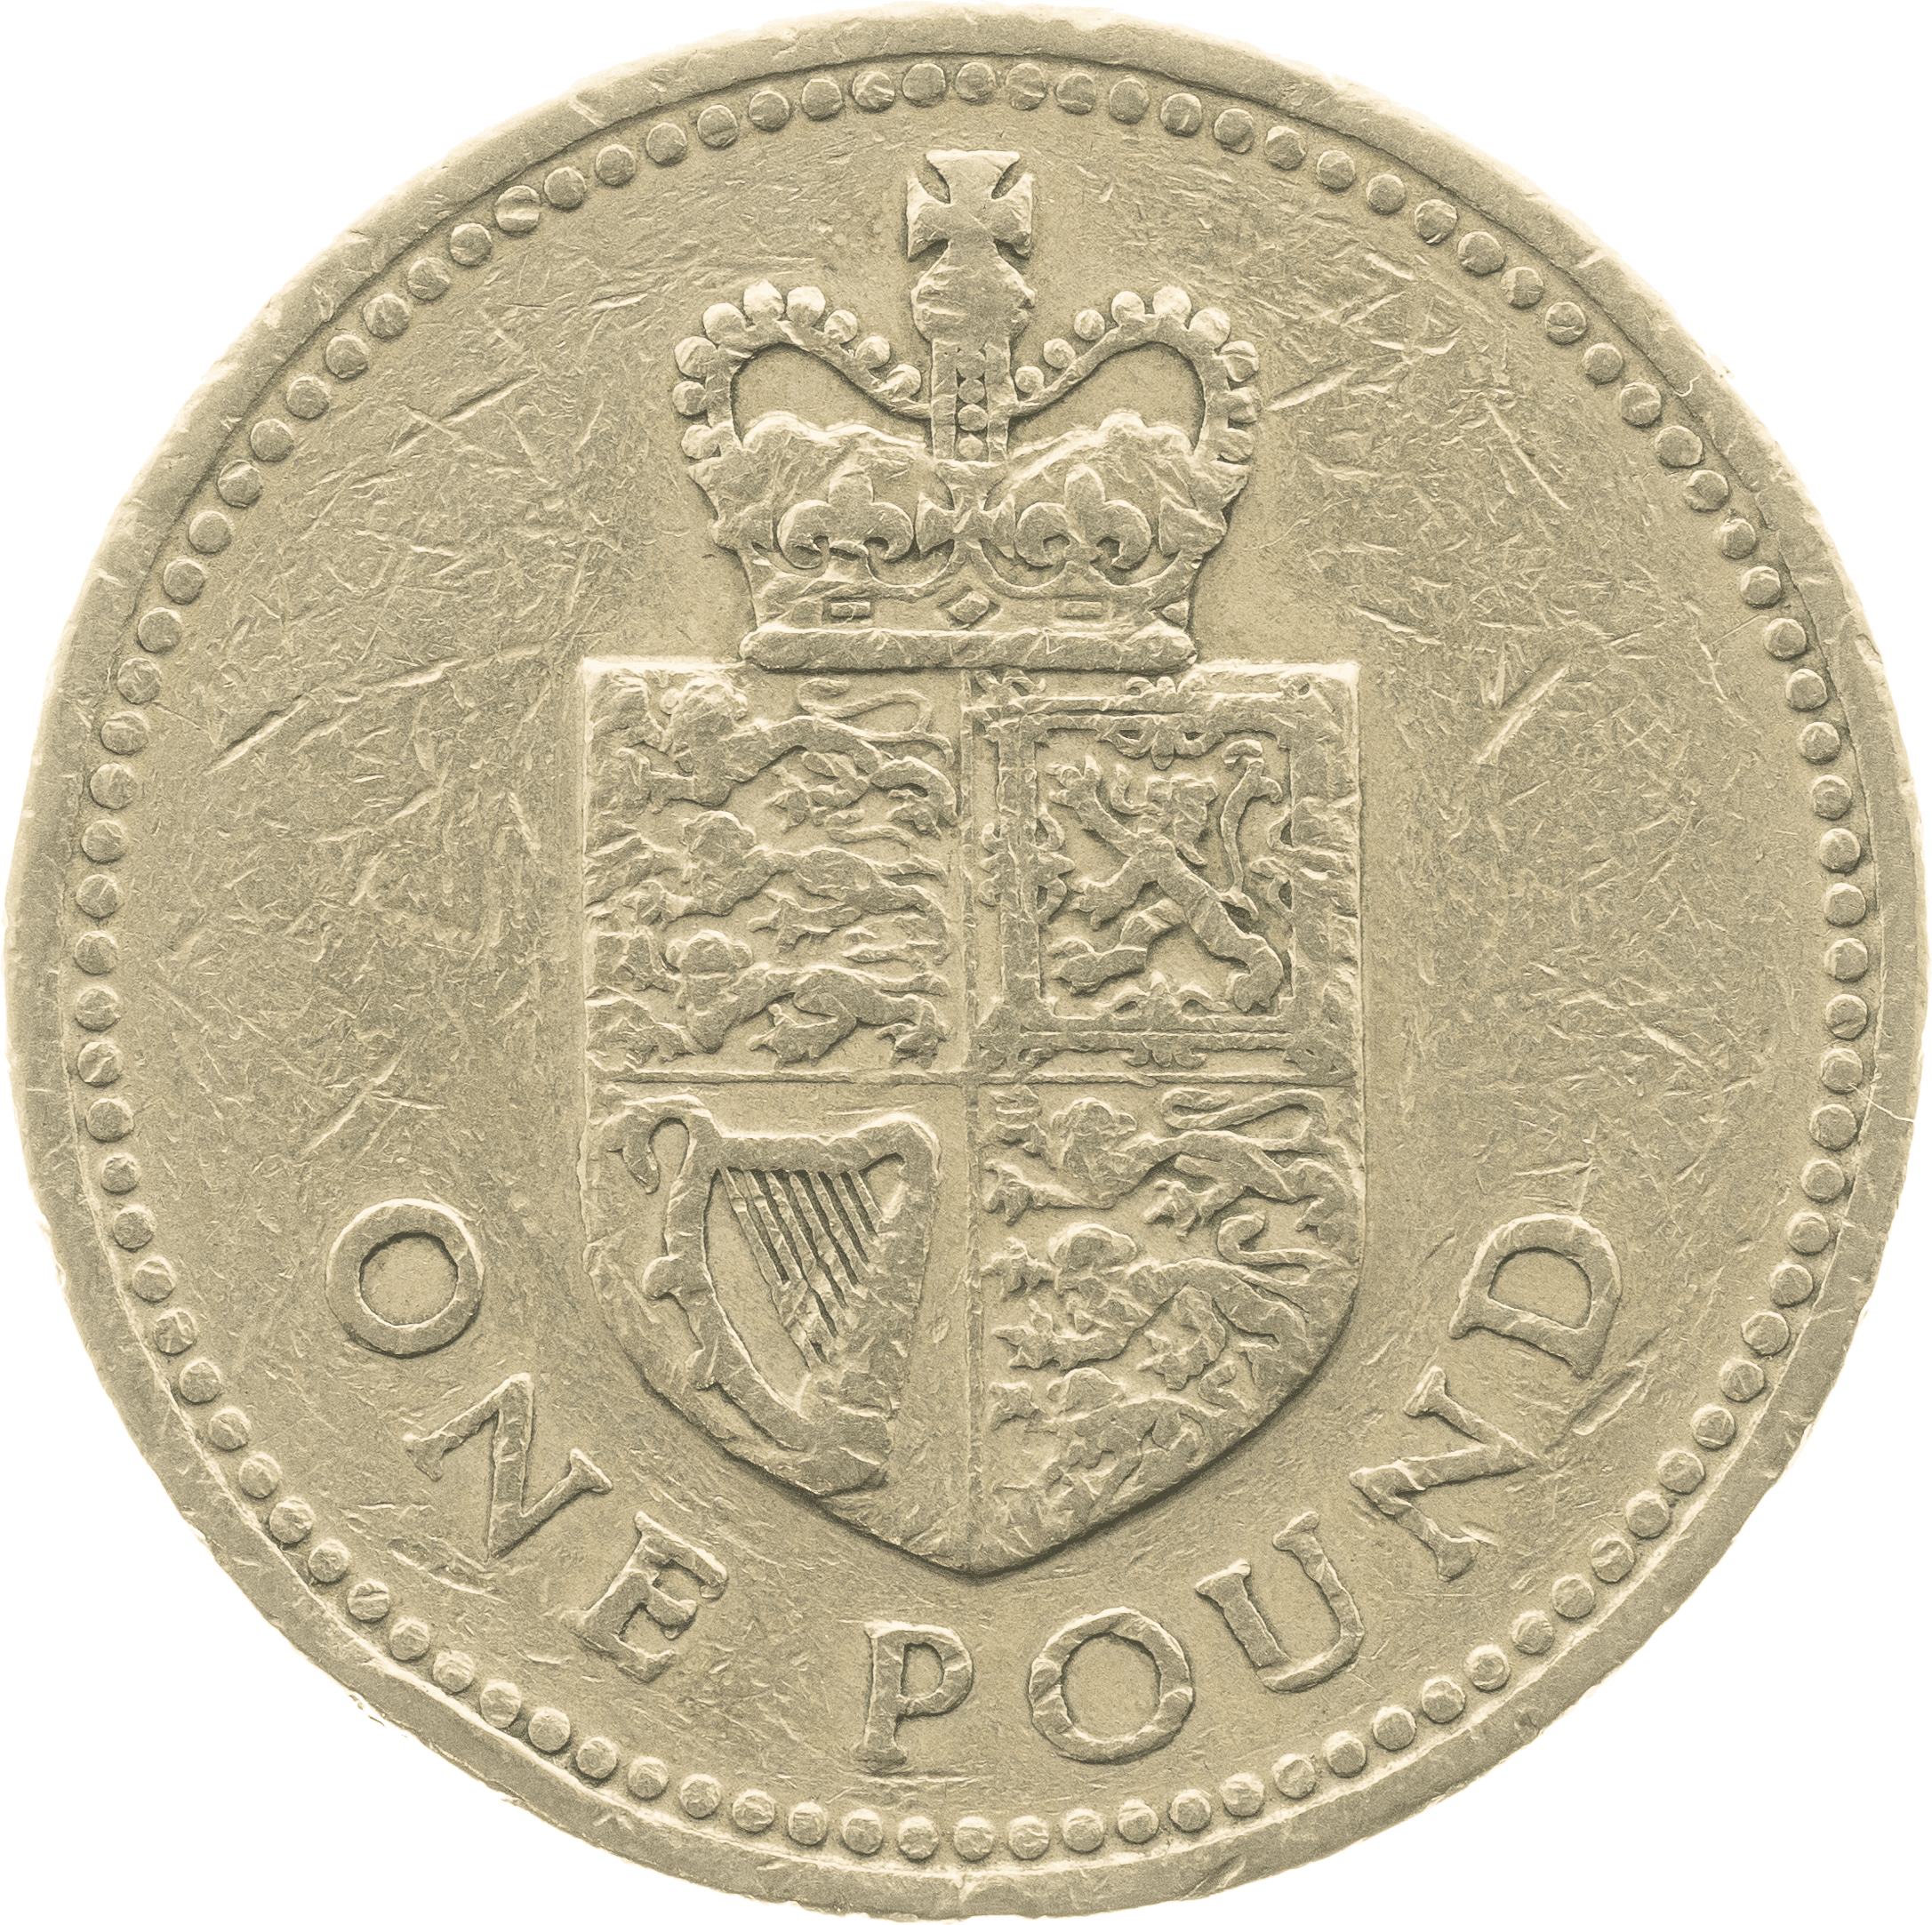 Royal Shield Gorringe £1 Coin